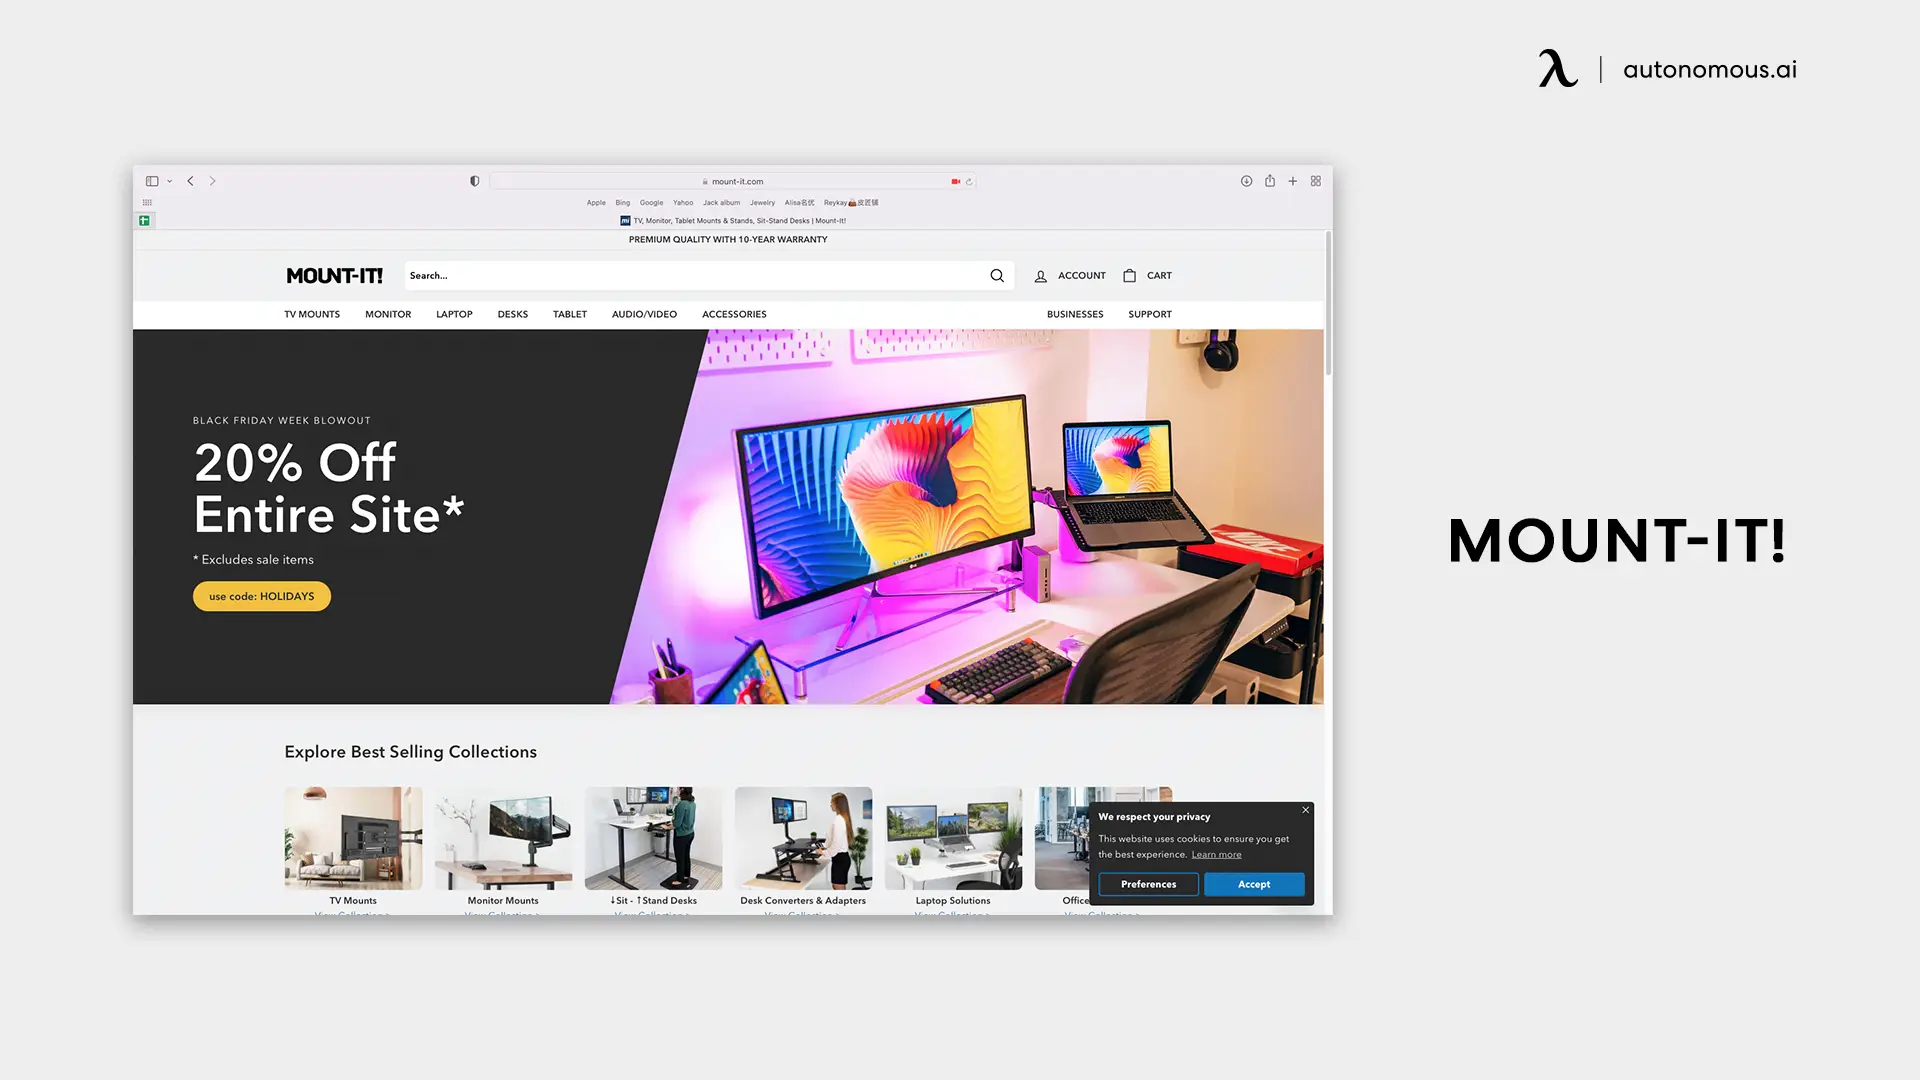 Mount-It! - office furniture online store